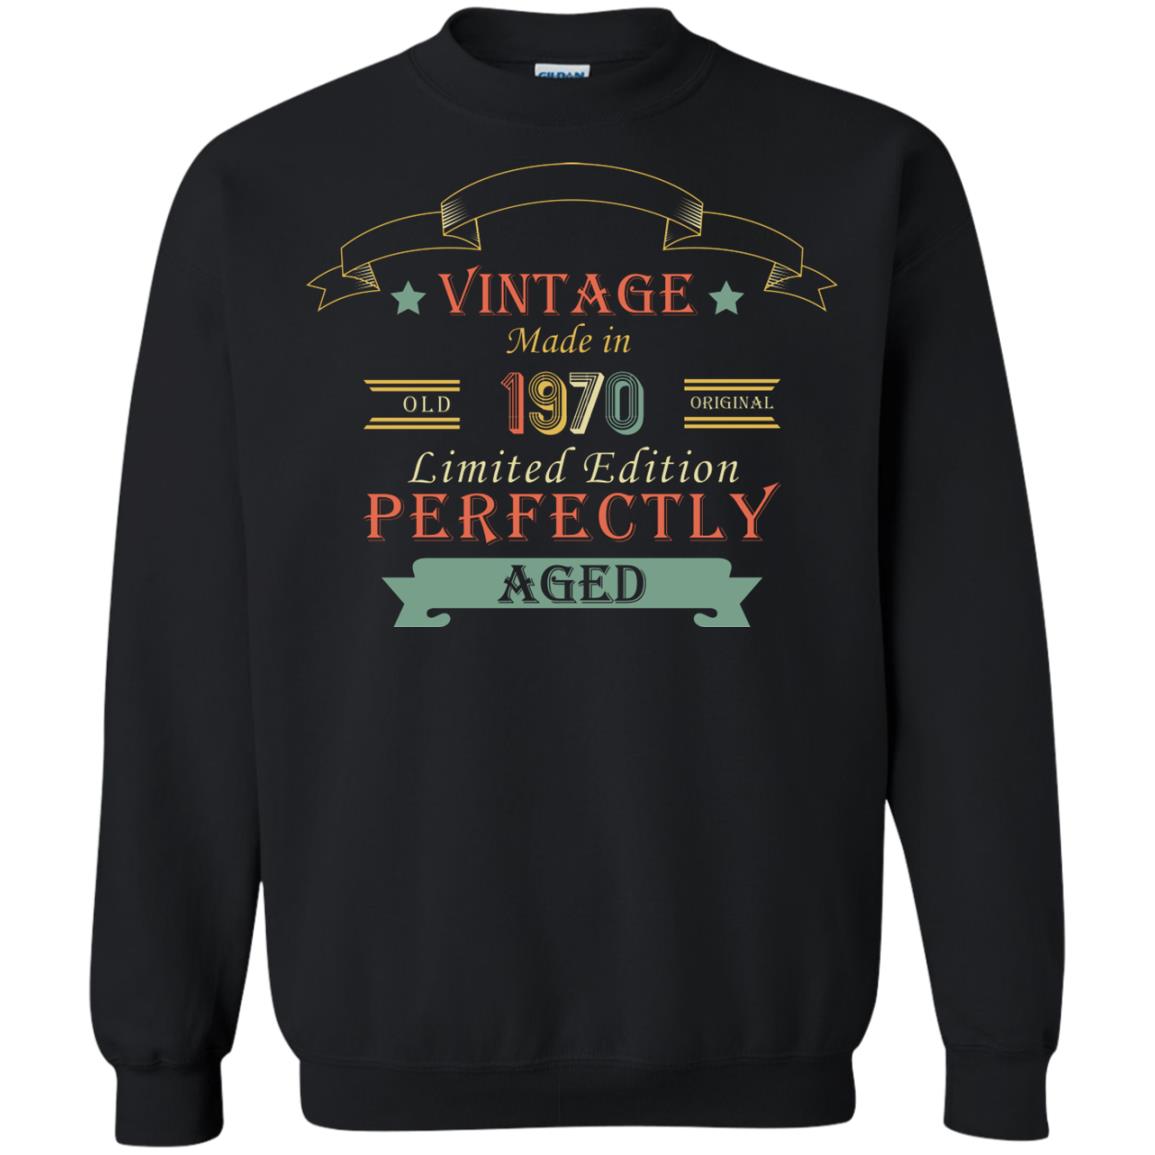 Vintage Made In Old 1970 Original Limited Edition Perfectly Aged 48th Birthday T-shirtG180 Gildan Crewneck Pullover Sweatshirt 8 oz.